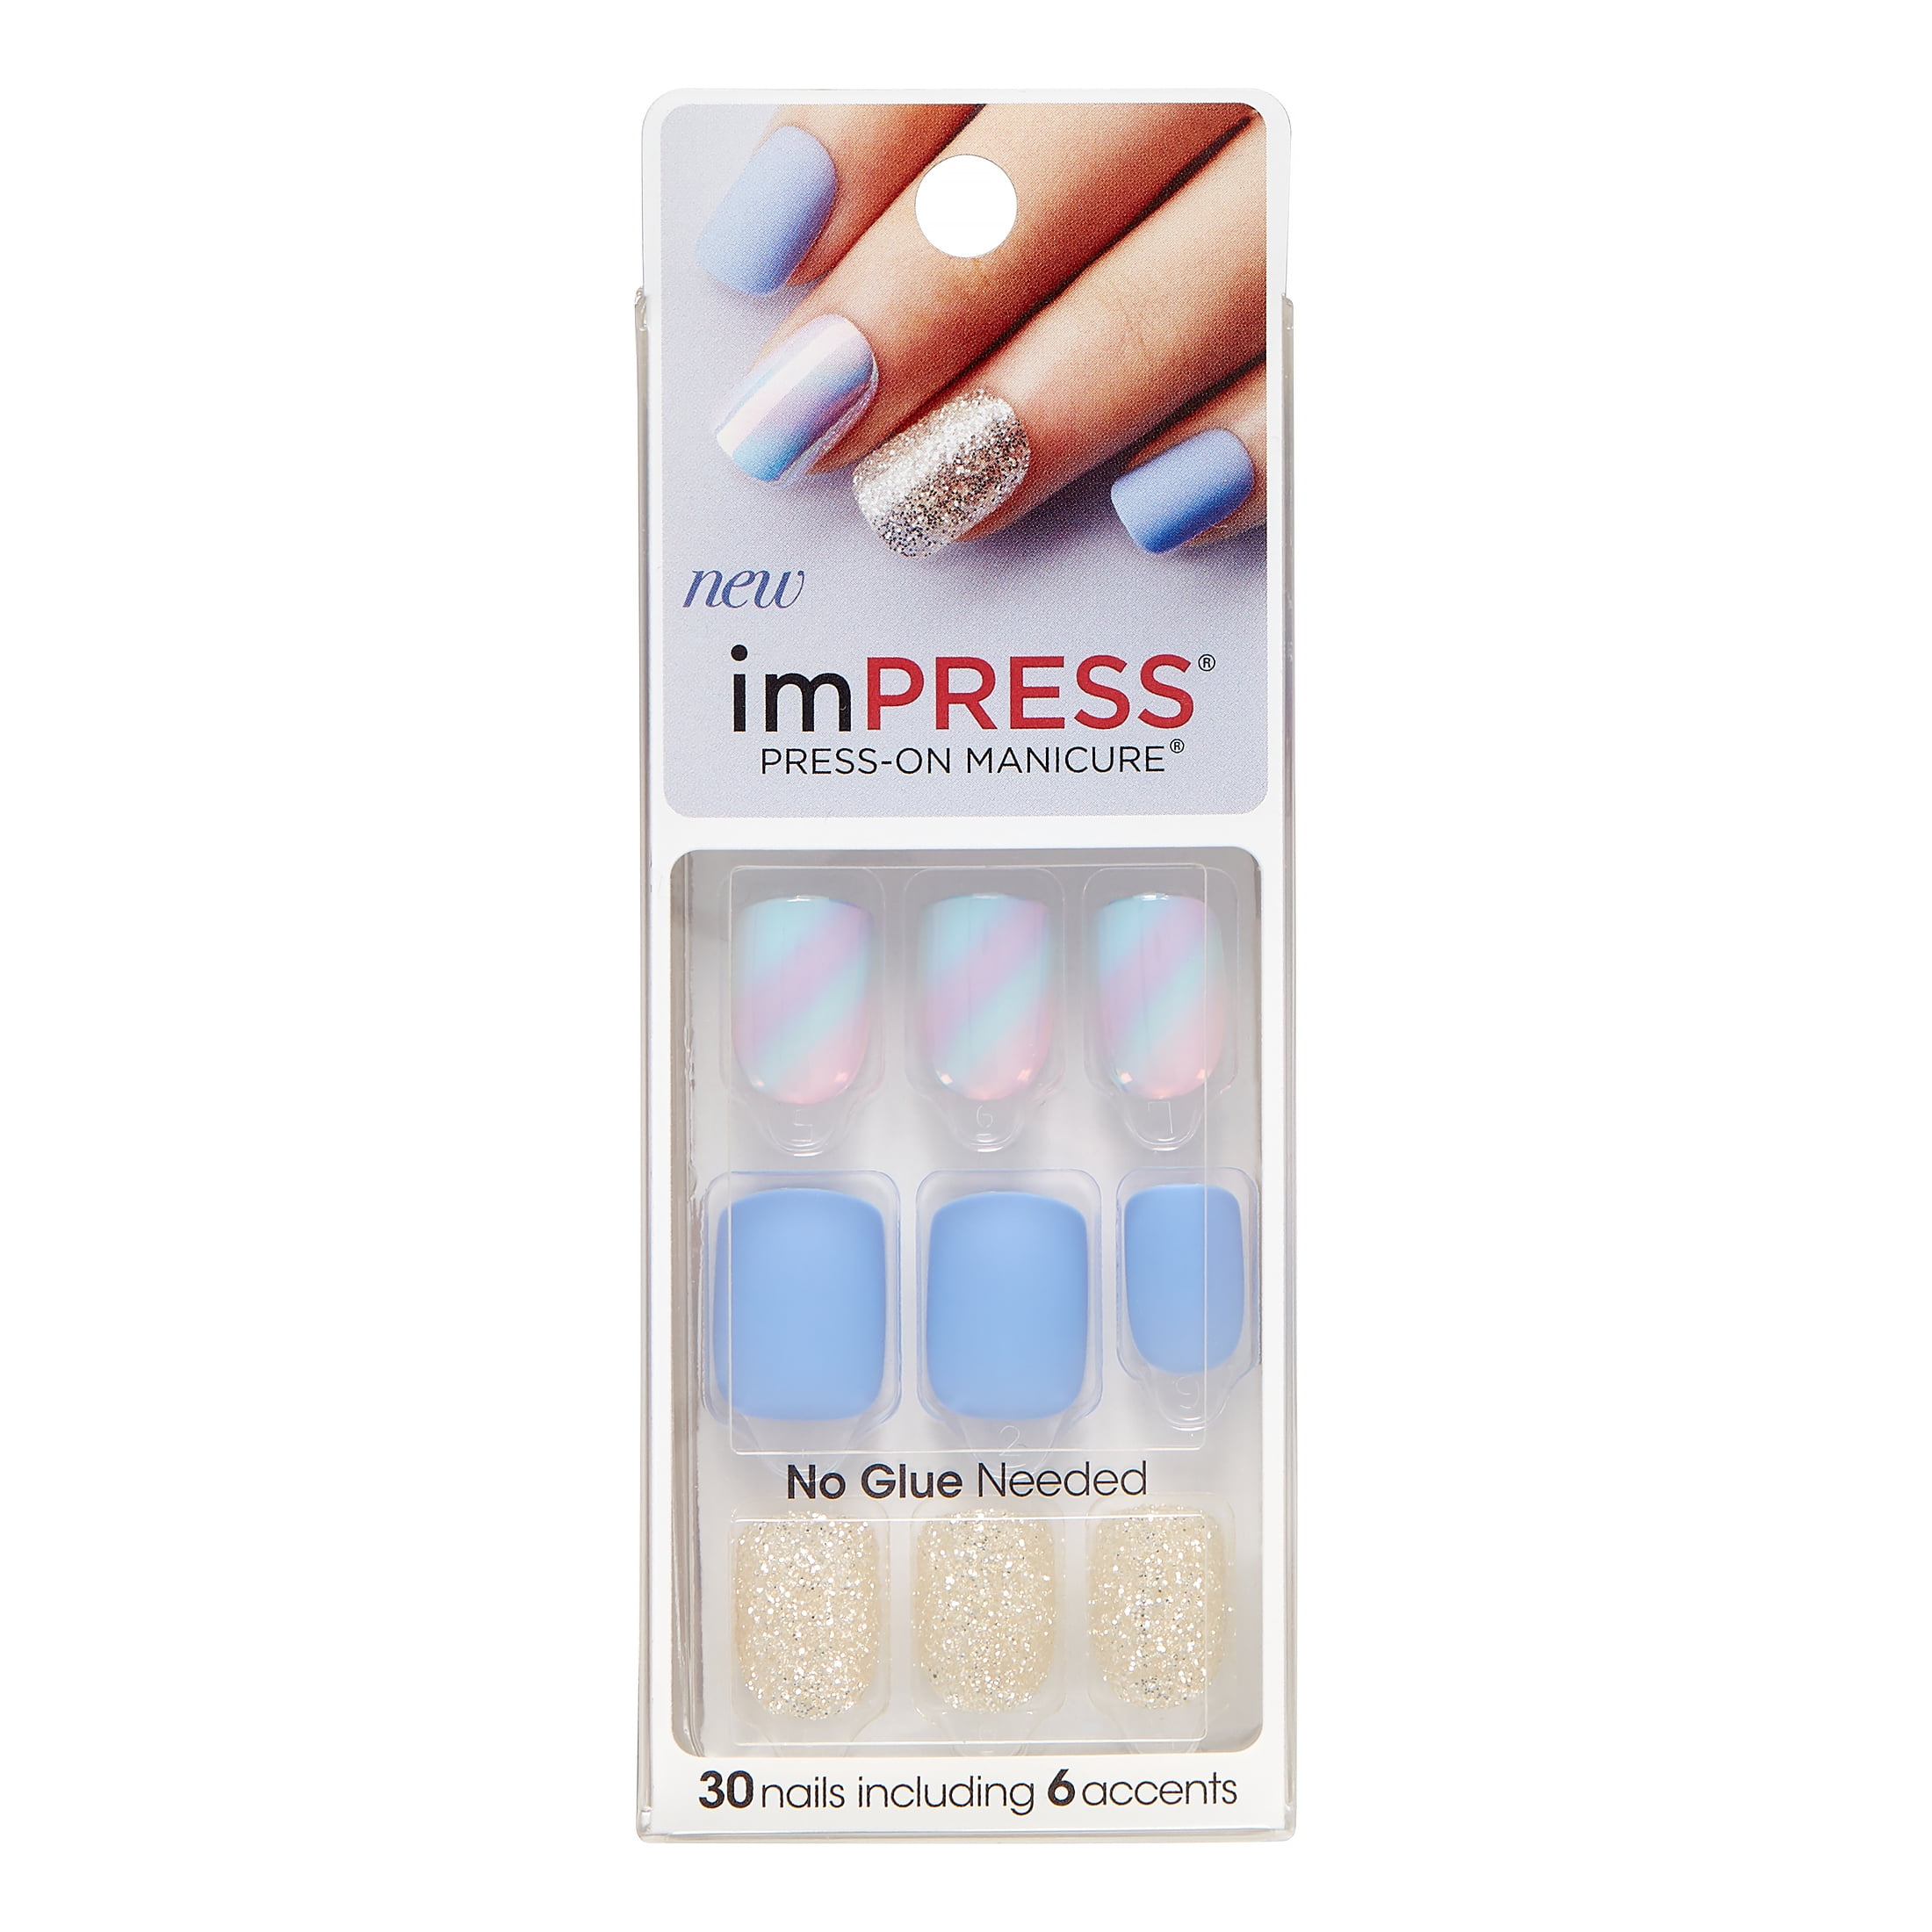 ImPRESS Press-on Nails Gel Manicure - Firefly - Walmart.com - Walmart.com